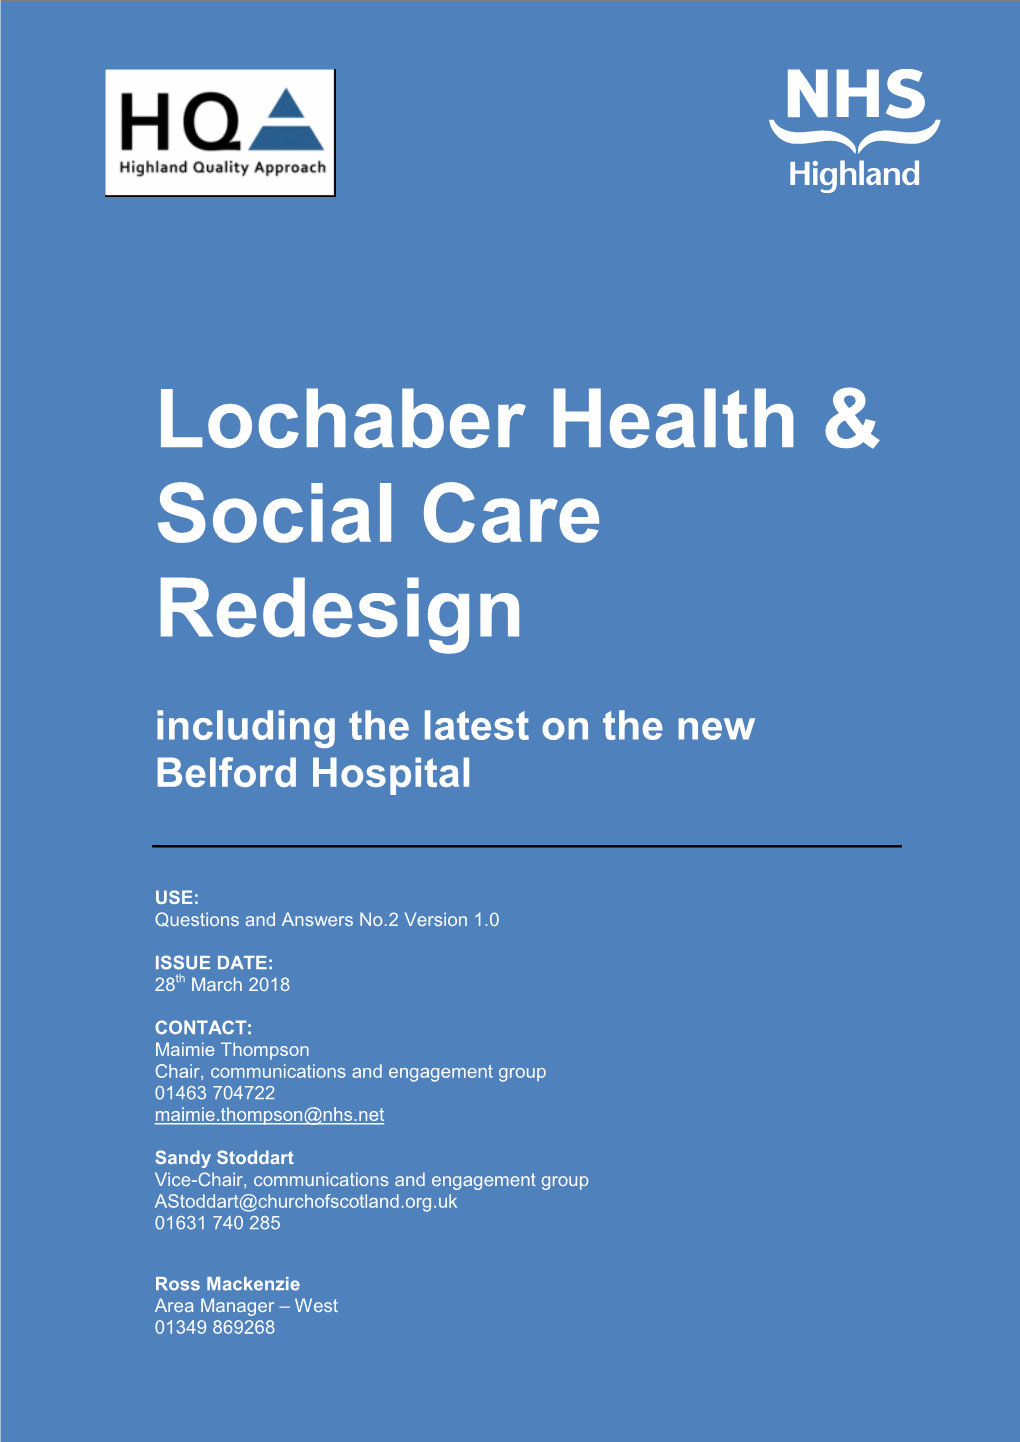 Lochaber Health & Social Care Redesign